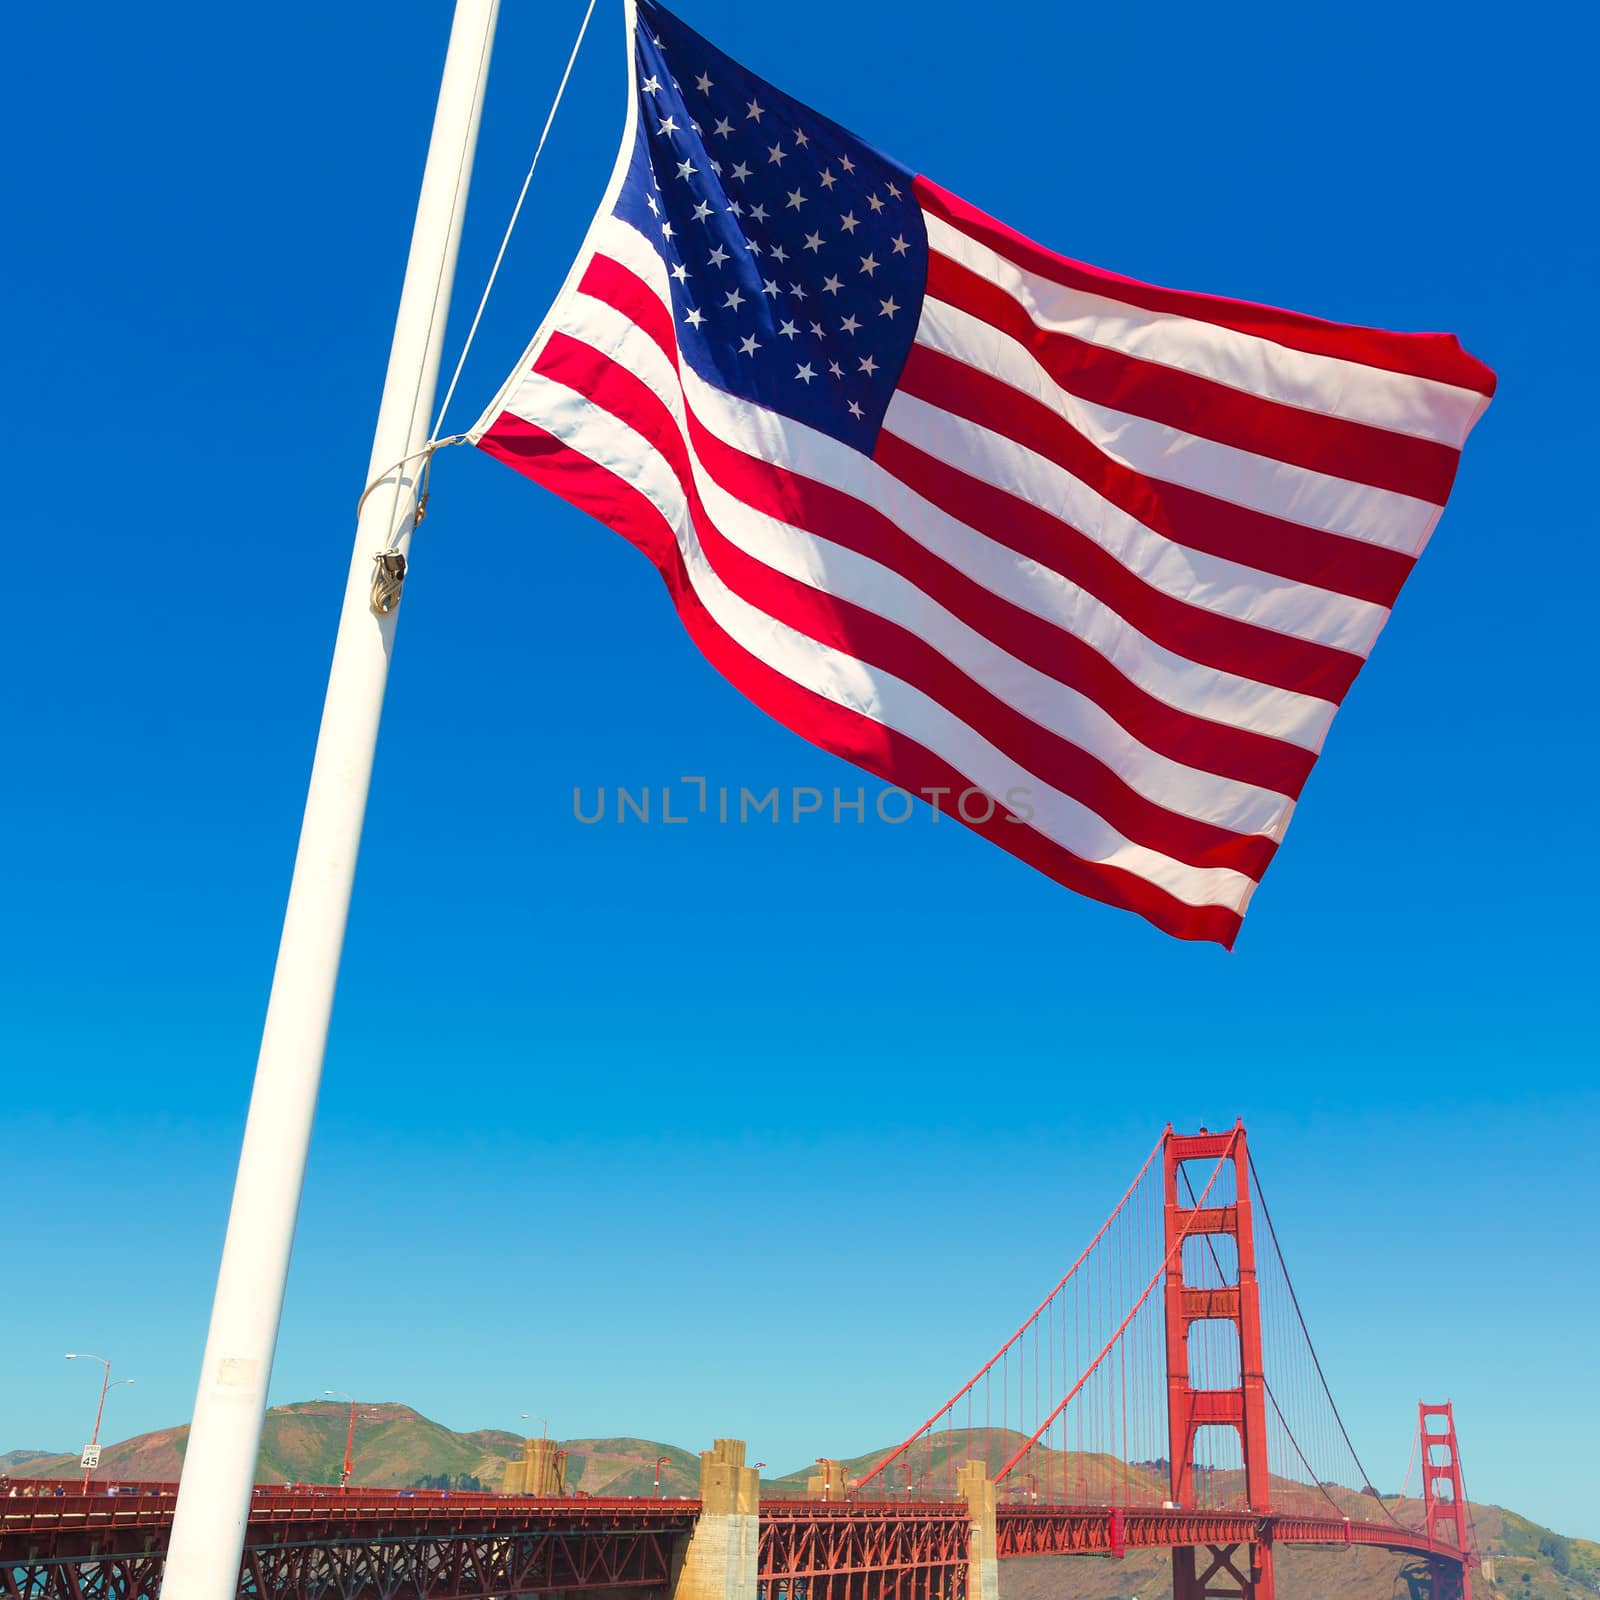 Golden Gate Bridge with United States flag in San Francisco California USA